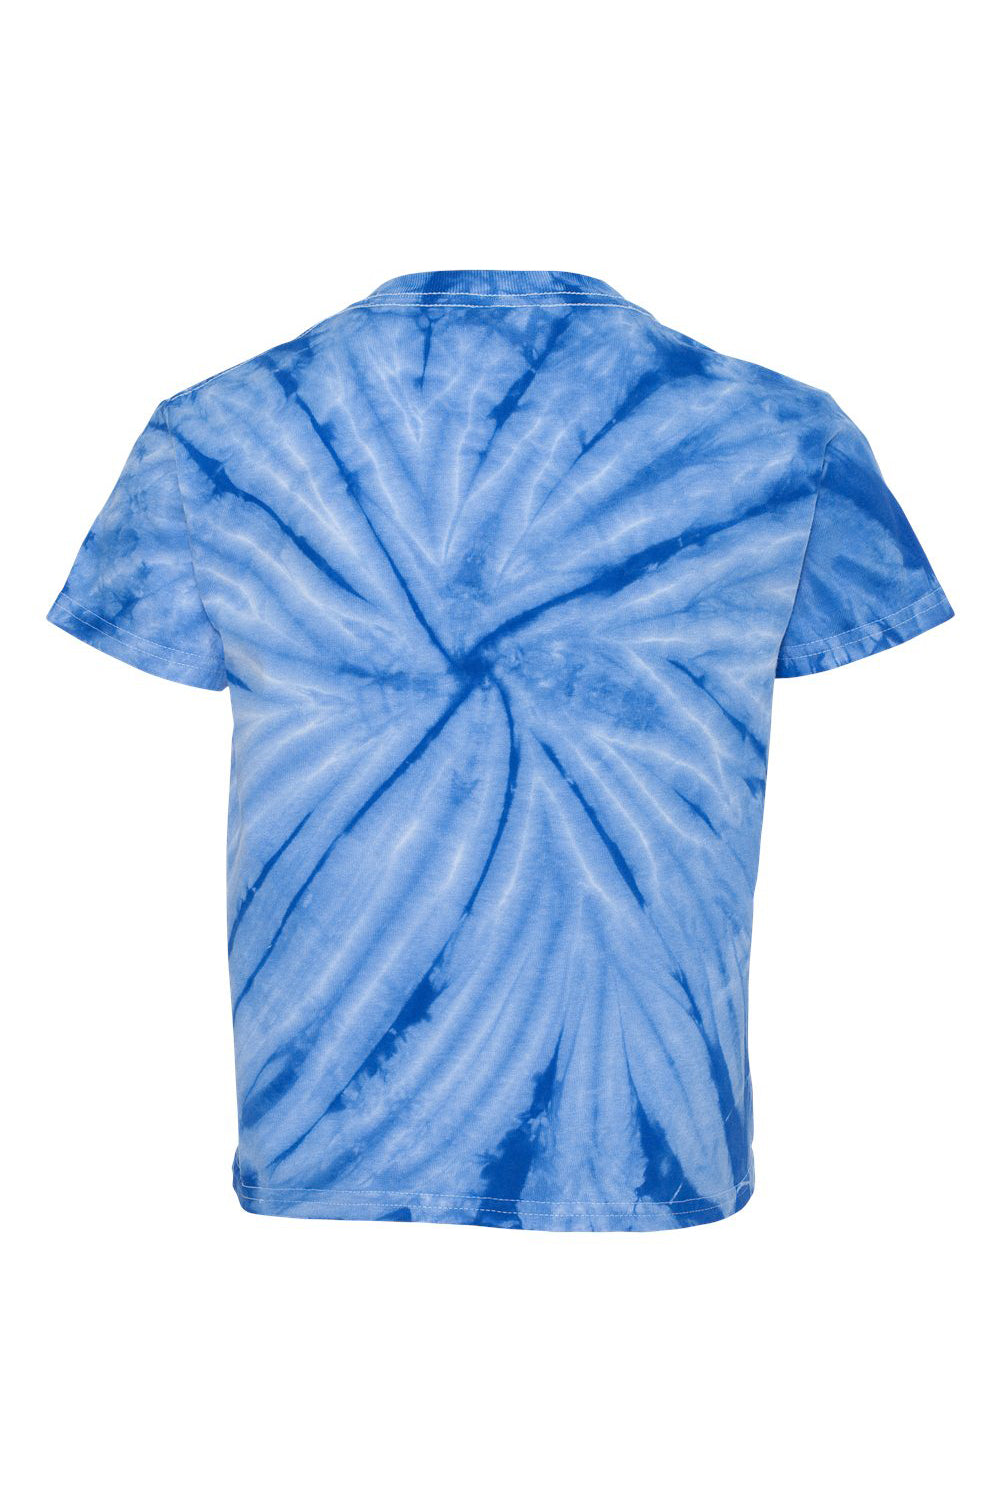 Dyenomite 20BCY Youth Cyclone Pinwheel Tie Dyed Short Sleeve Crewneck T-Shirt Royal Blue Flat Back